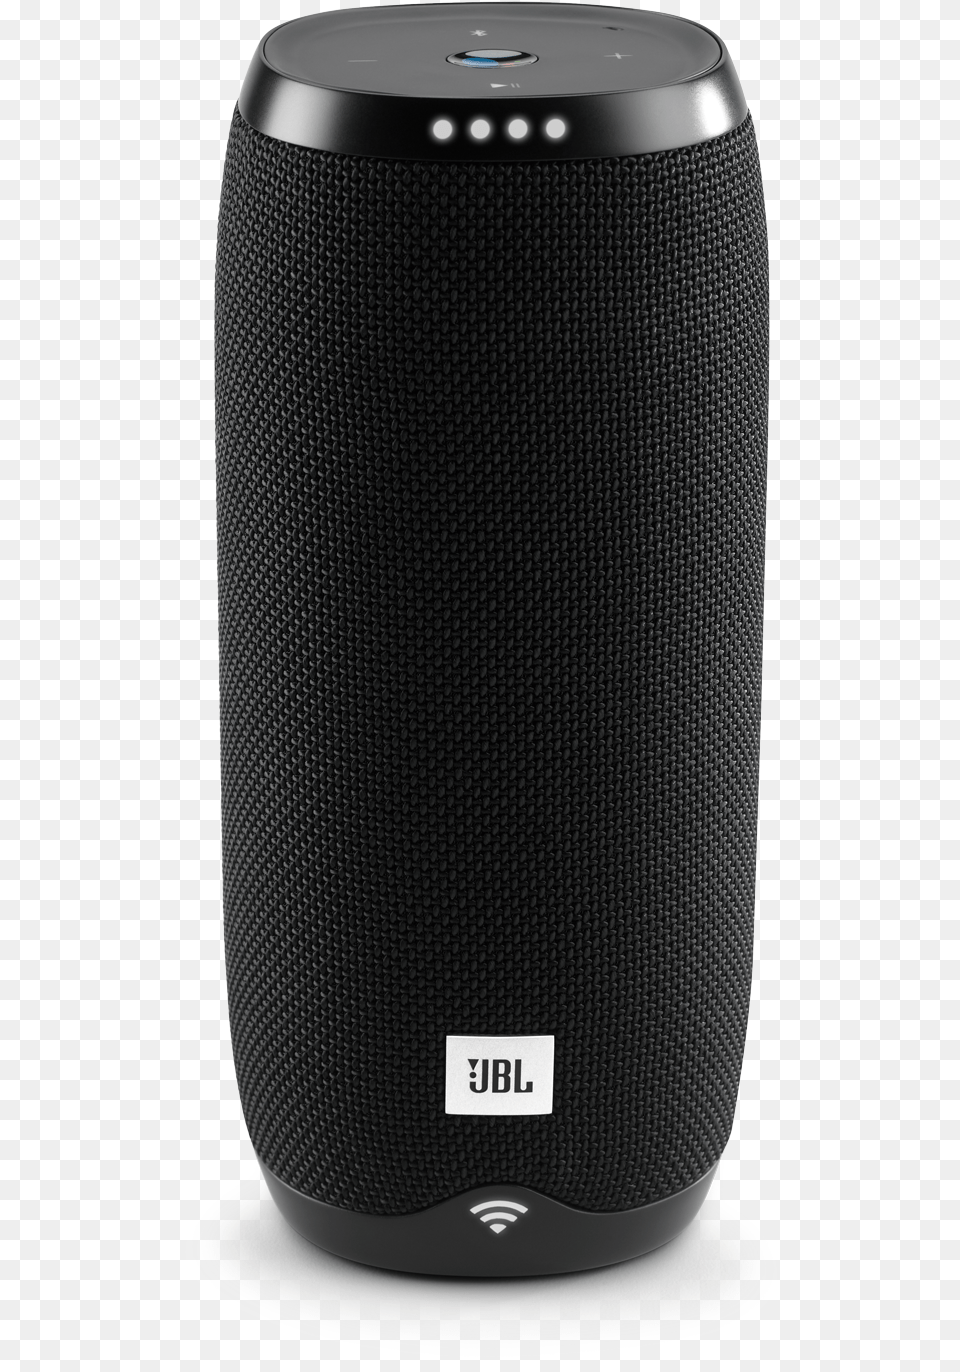 Jbl Link 20 Voice Activated Portable Speaker Jbl, Electronics Free Transparent Png